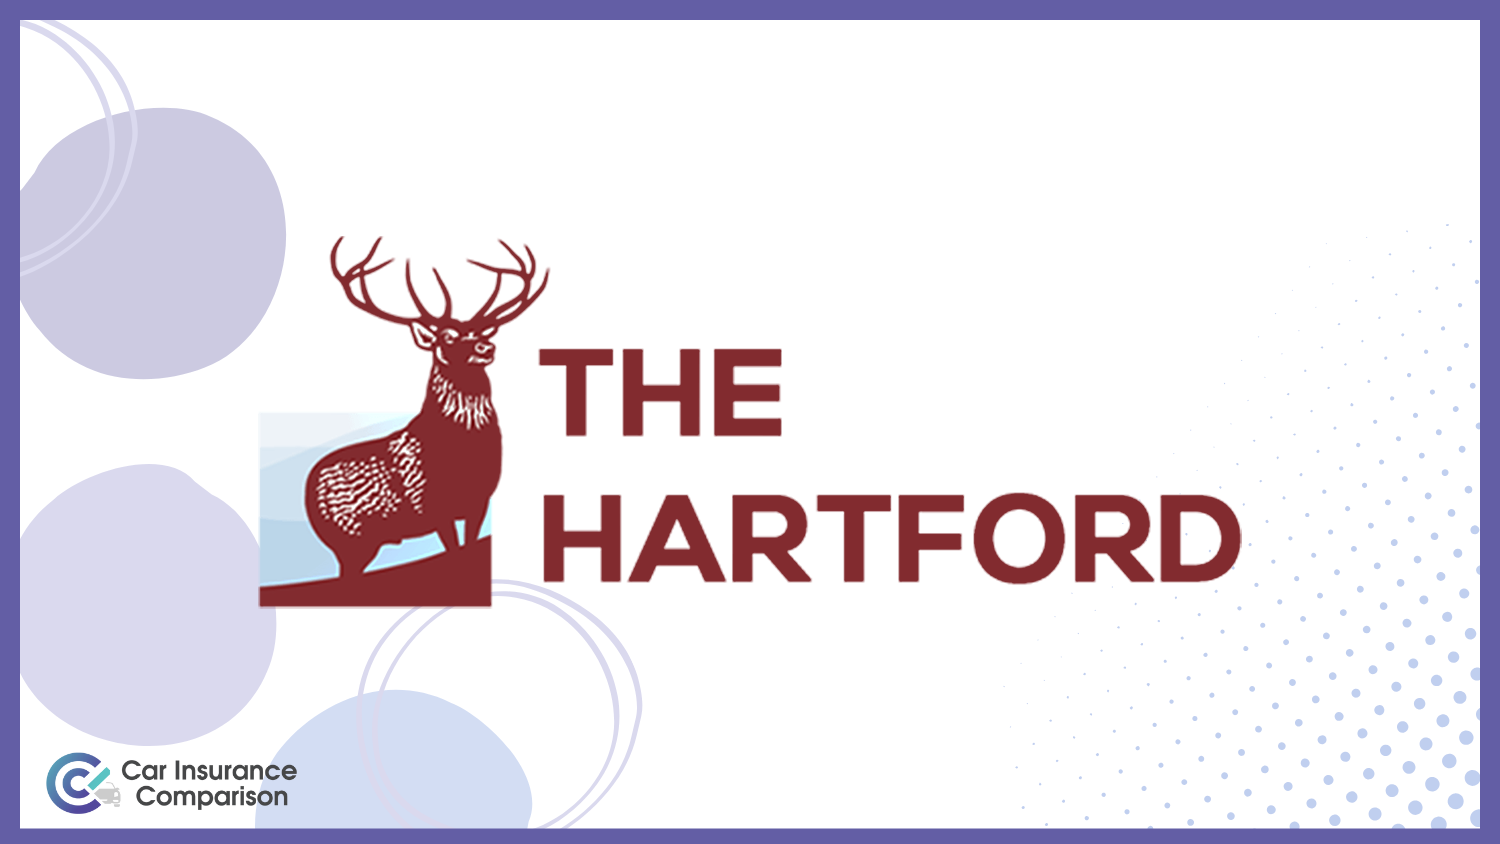 The Hartford: Best Car Insurance for Doctors